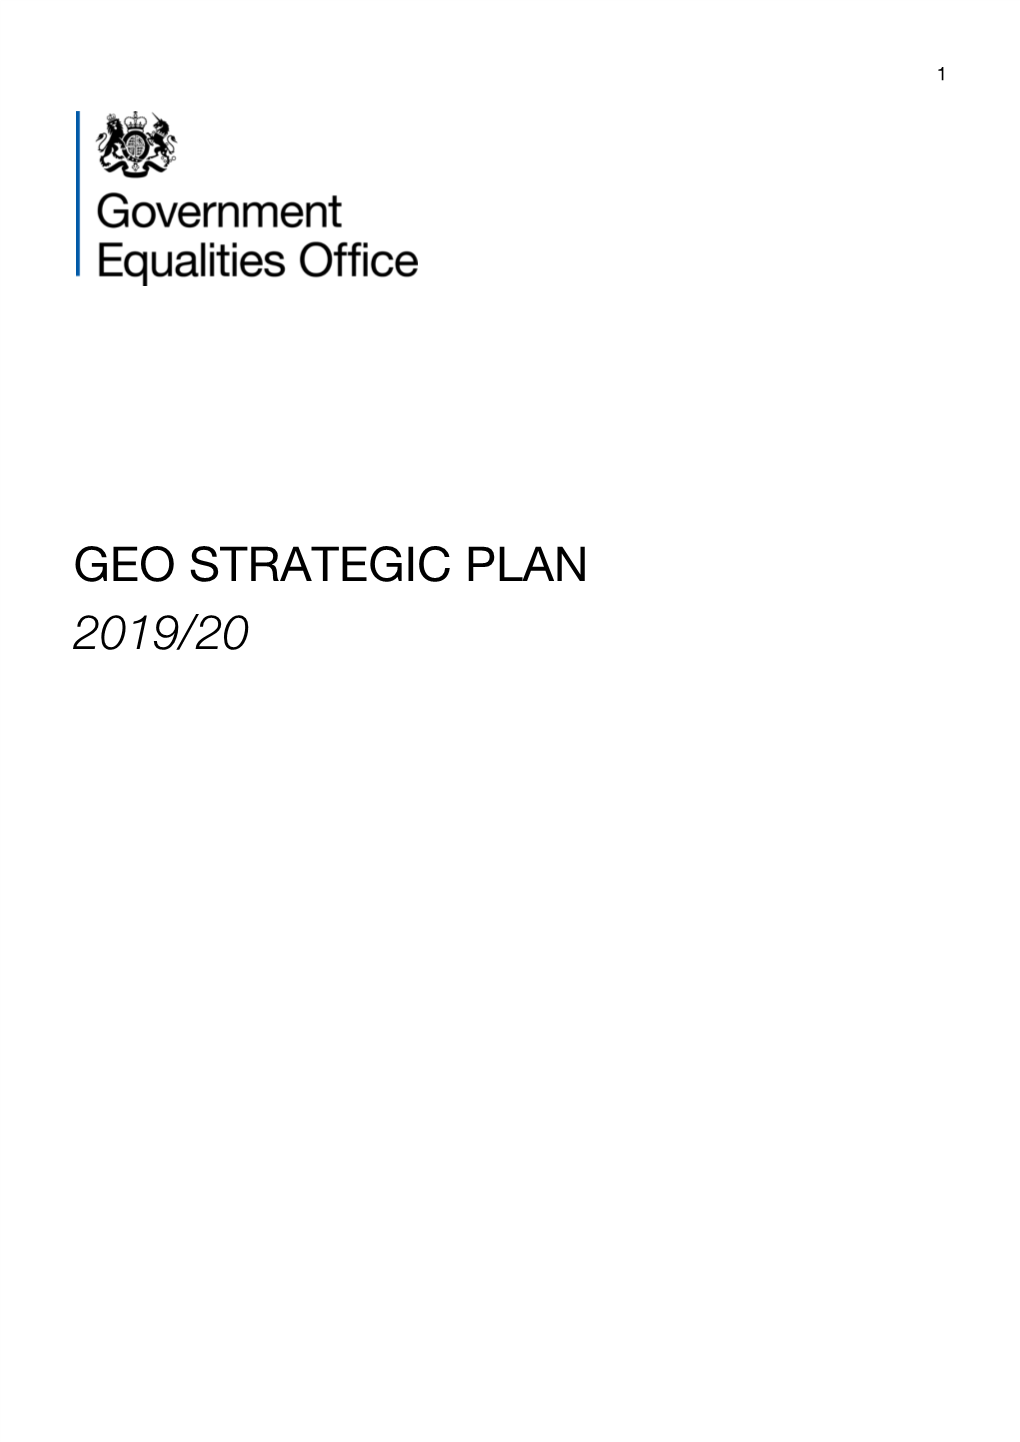 Geo Strategic Plan 2019/20